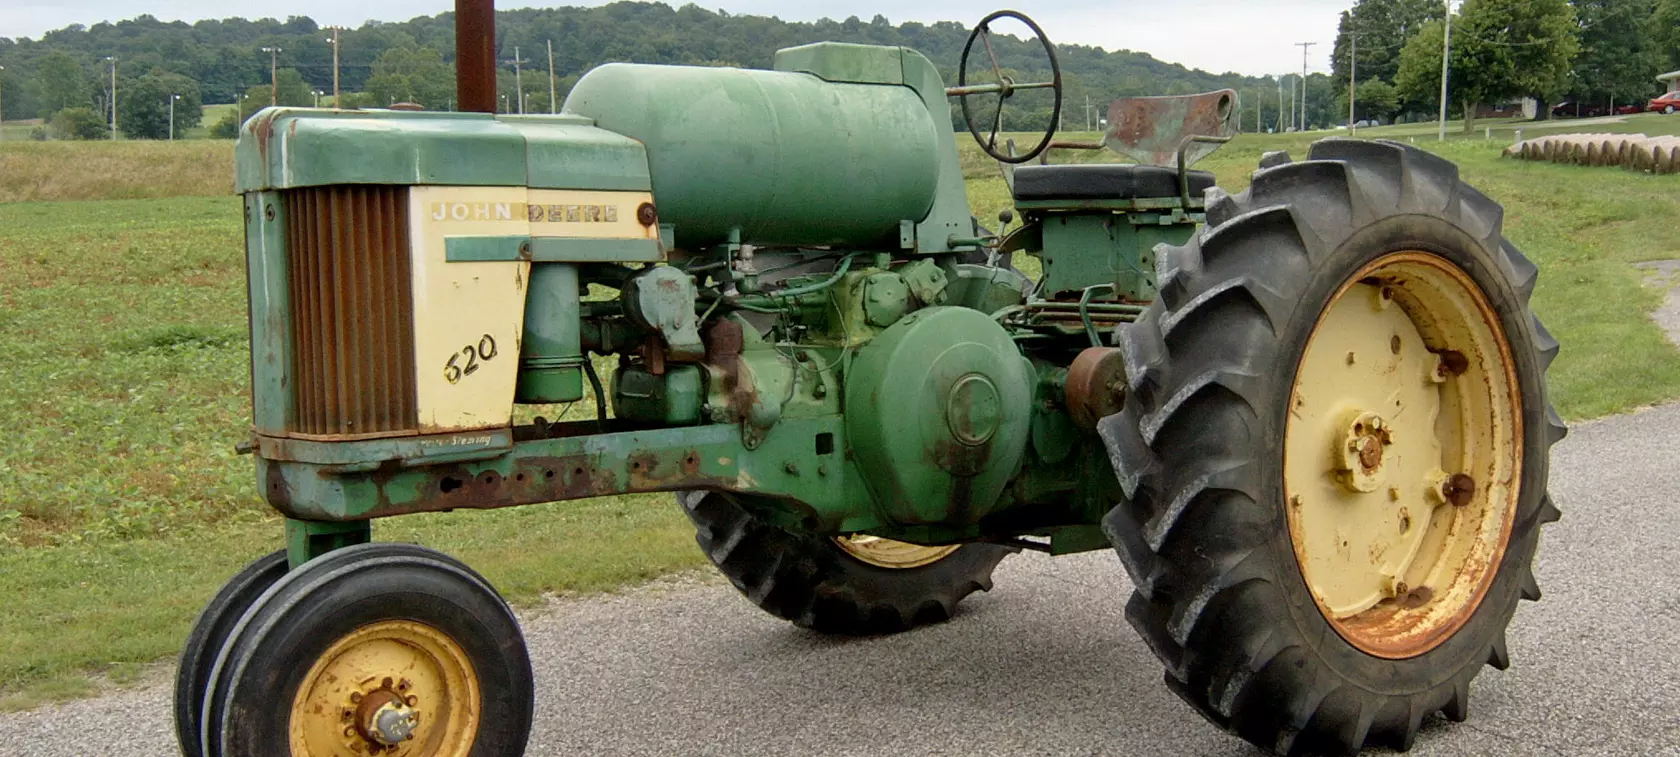 LPG tractors by John Deere - farming with gas